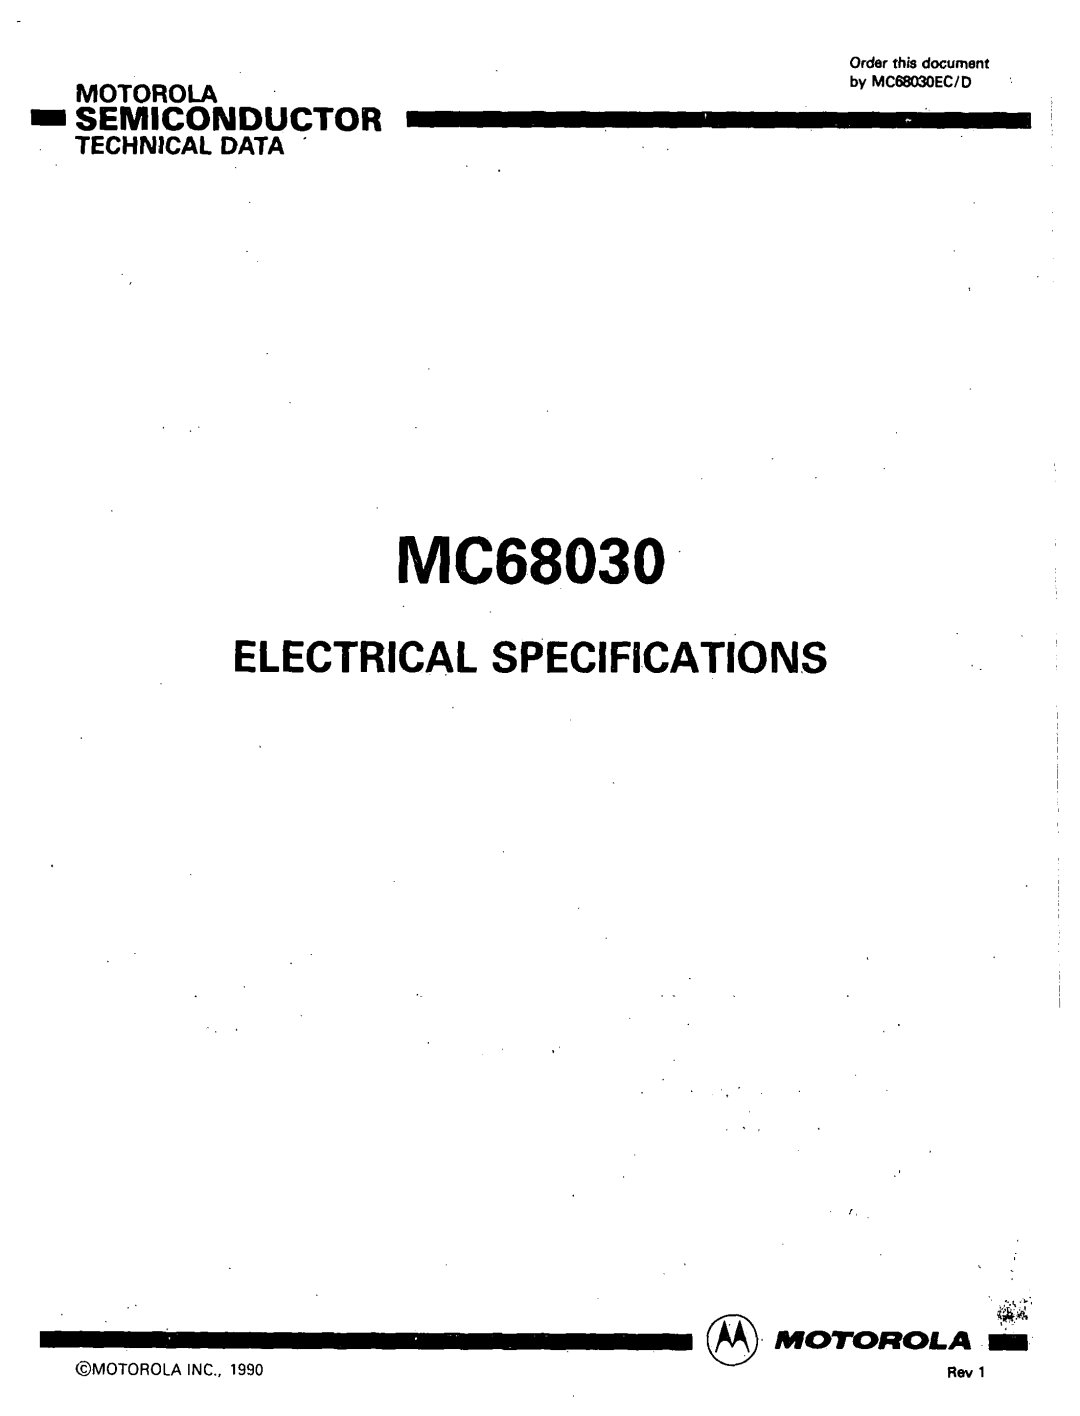 Motorola MC68030 specifications Electrical Specifications, mS E M I C O N D U C T O R, Motorola, Technical Data 